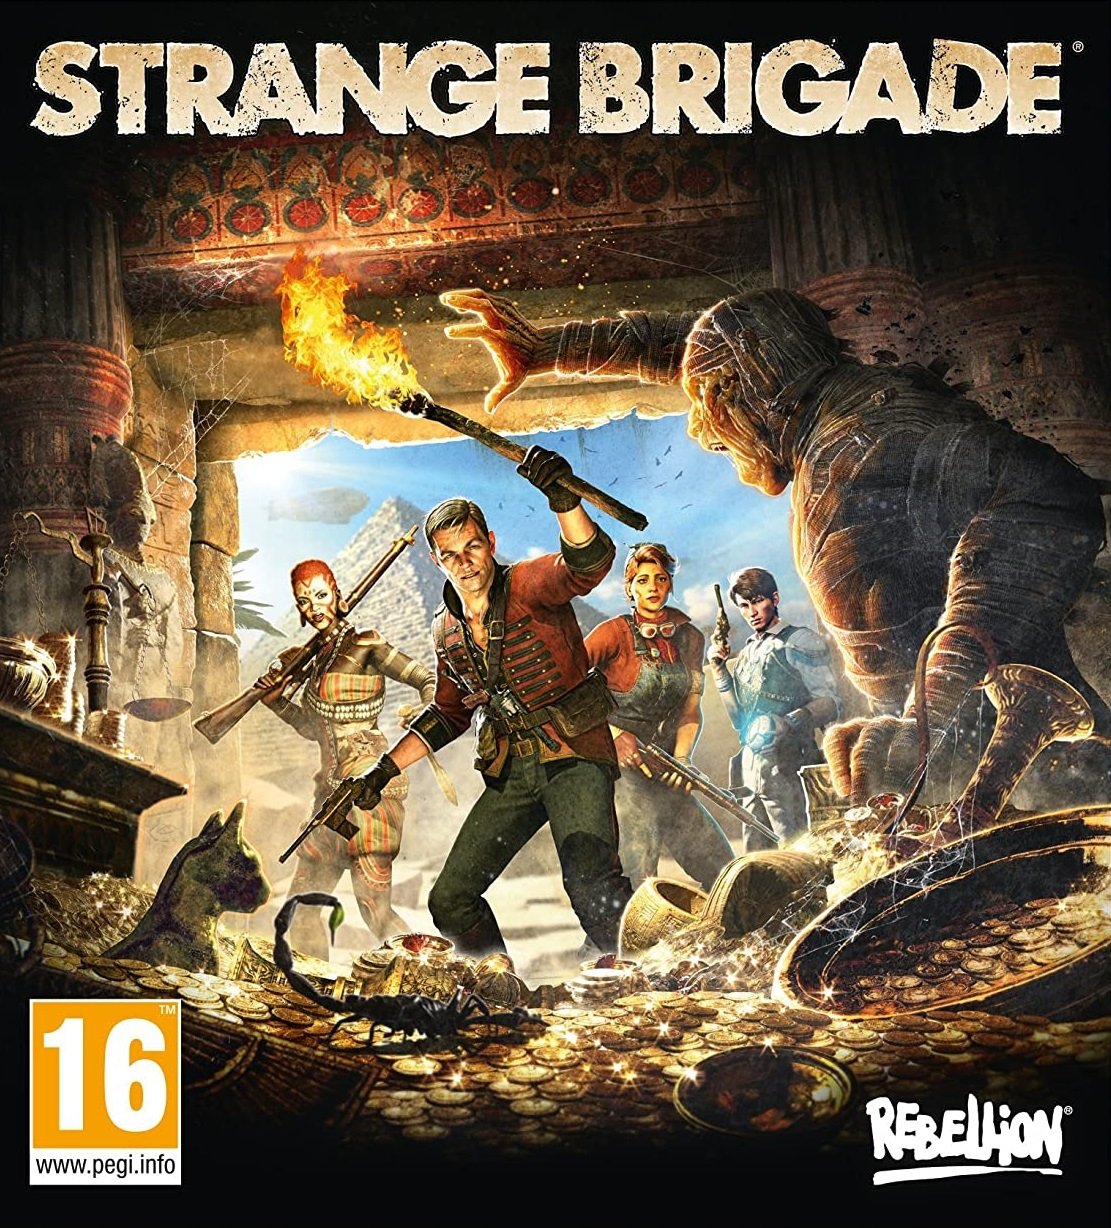 jaquette du jeu vidéo Strange Brigade